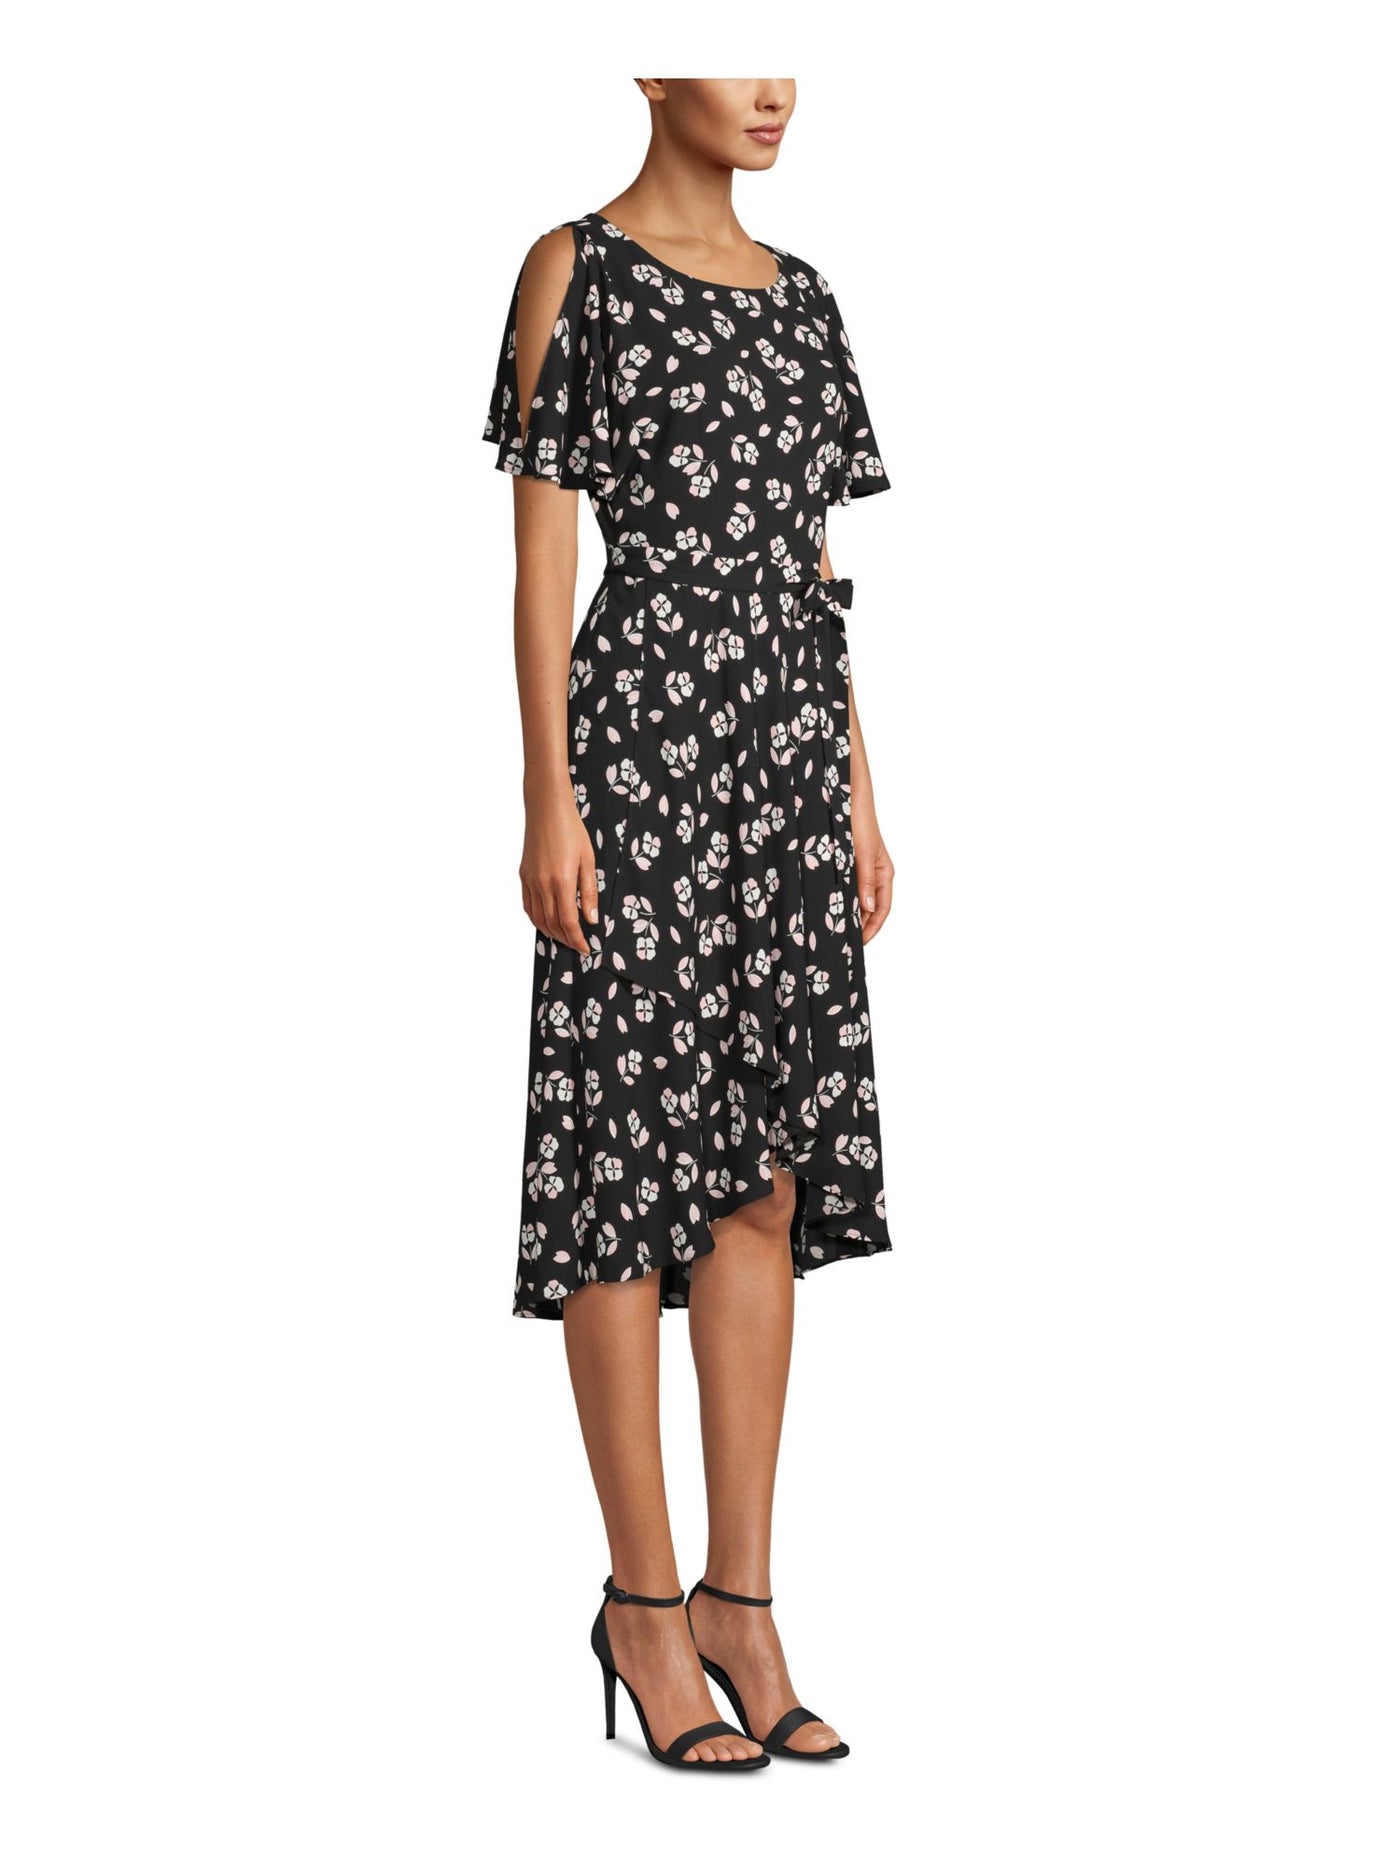 ANNE KLEIN Womens Black Floral Short Sleeve Jewel Neck Below The Knee Fit + Flare Dress 2